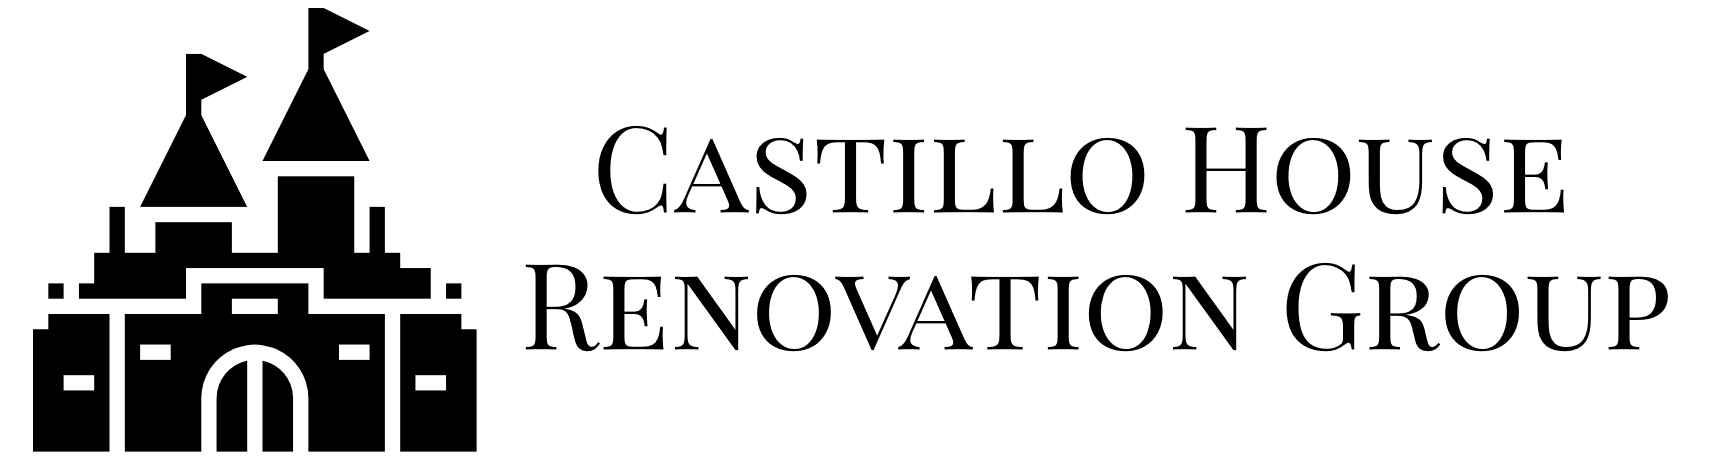 Castillo House Renovation Group